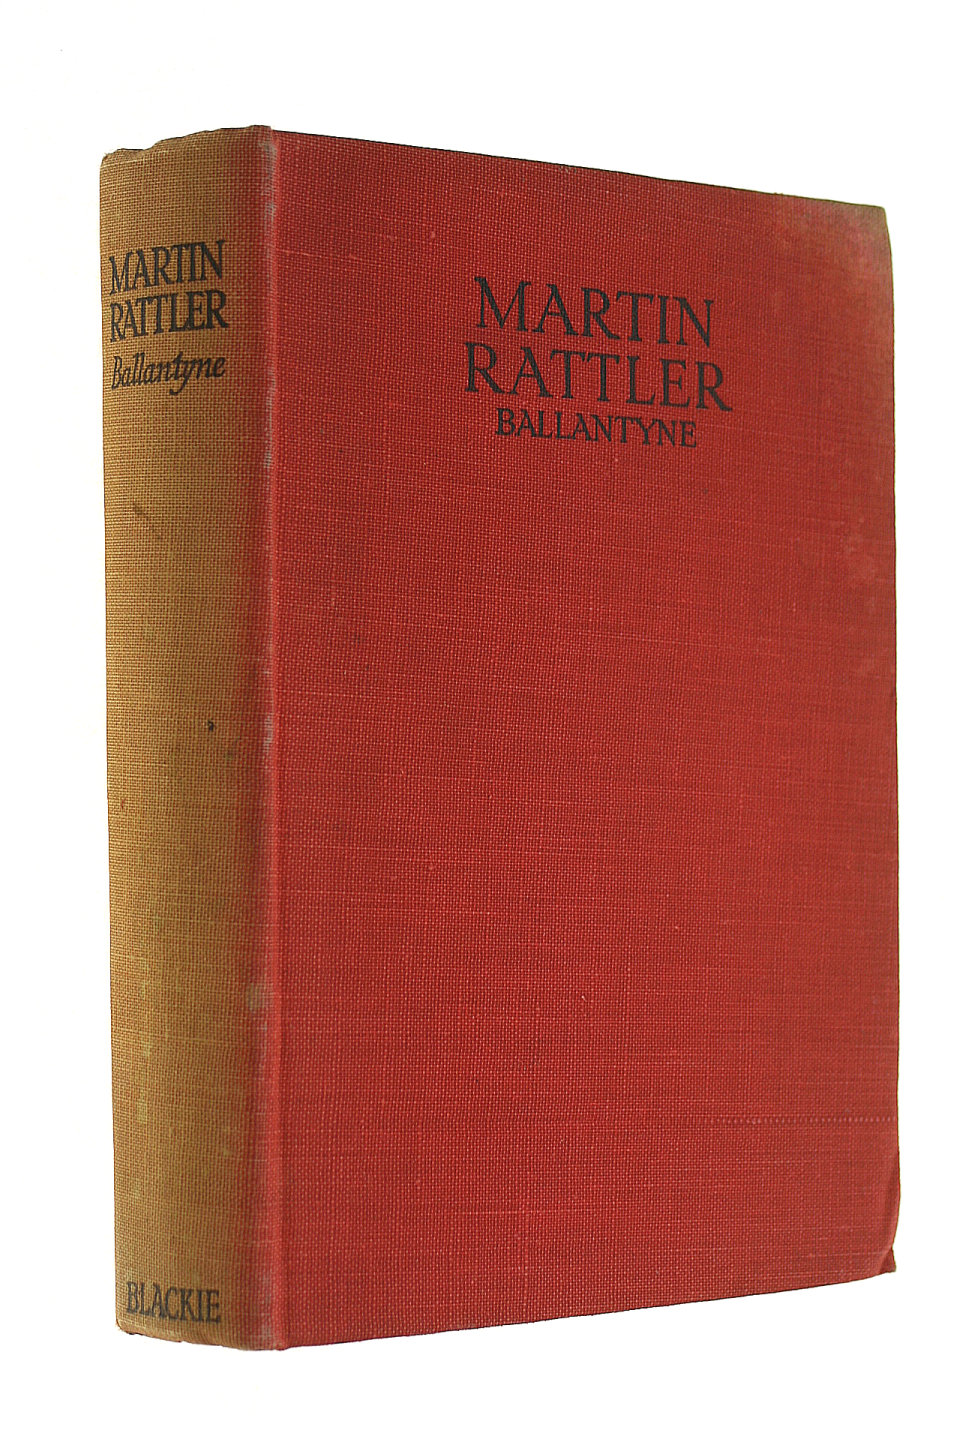 BALLANTYNE, R. M - Martin Rattler